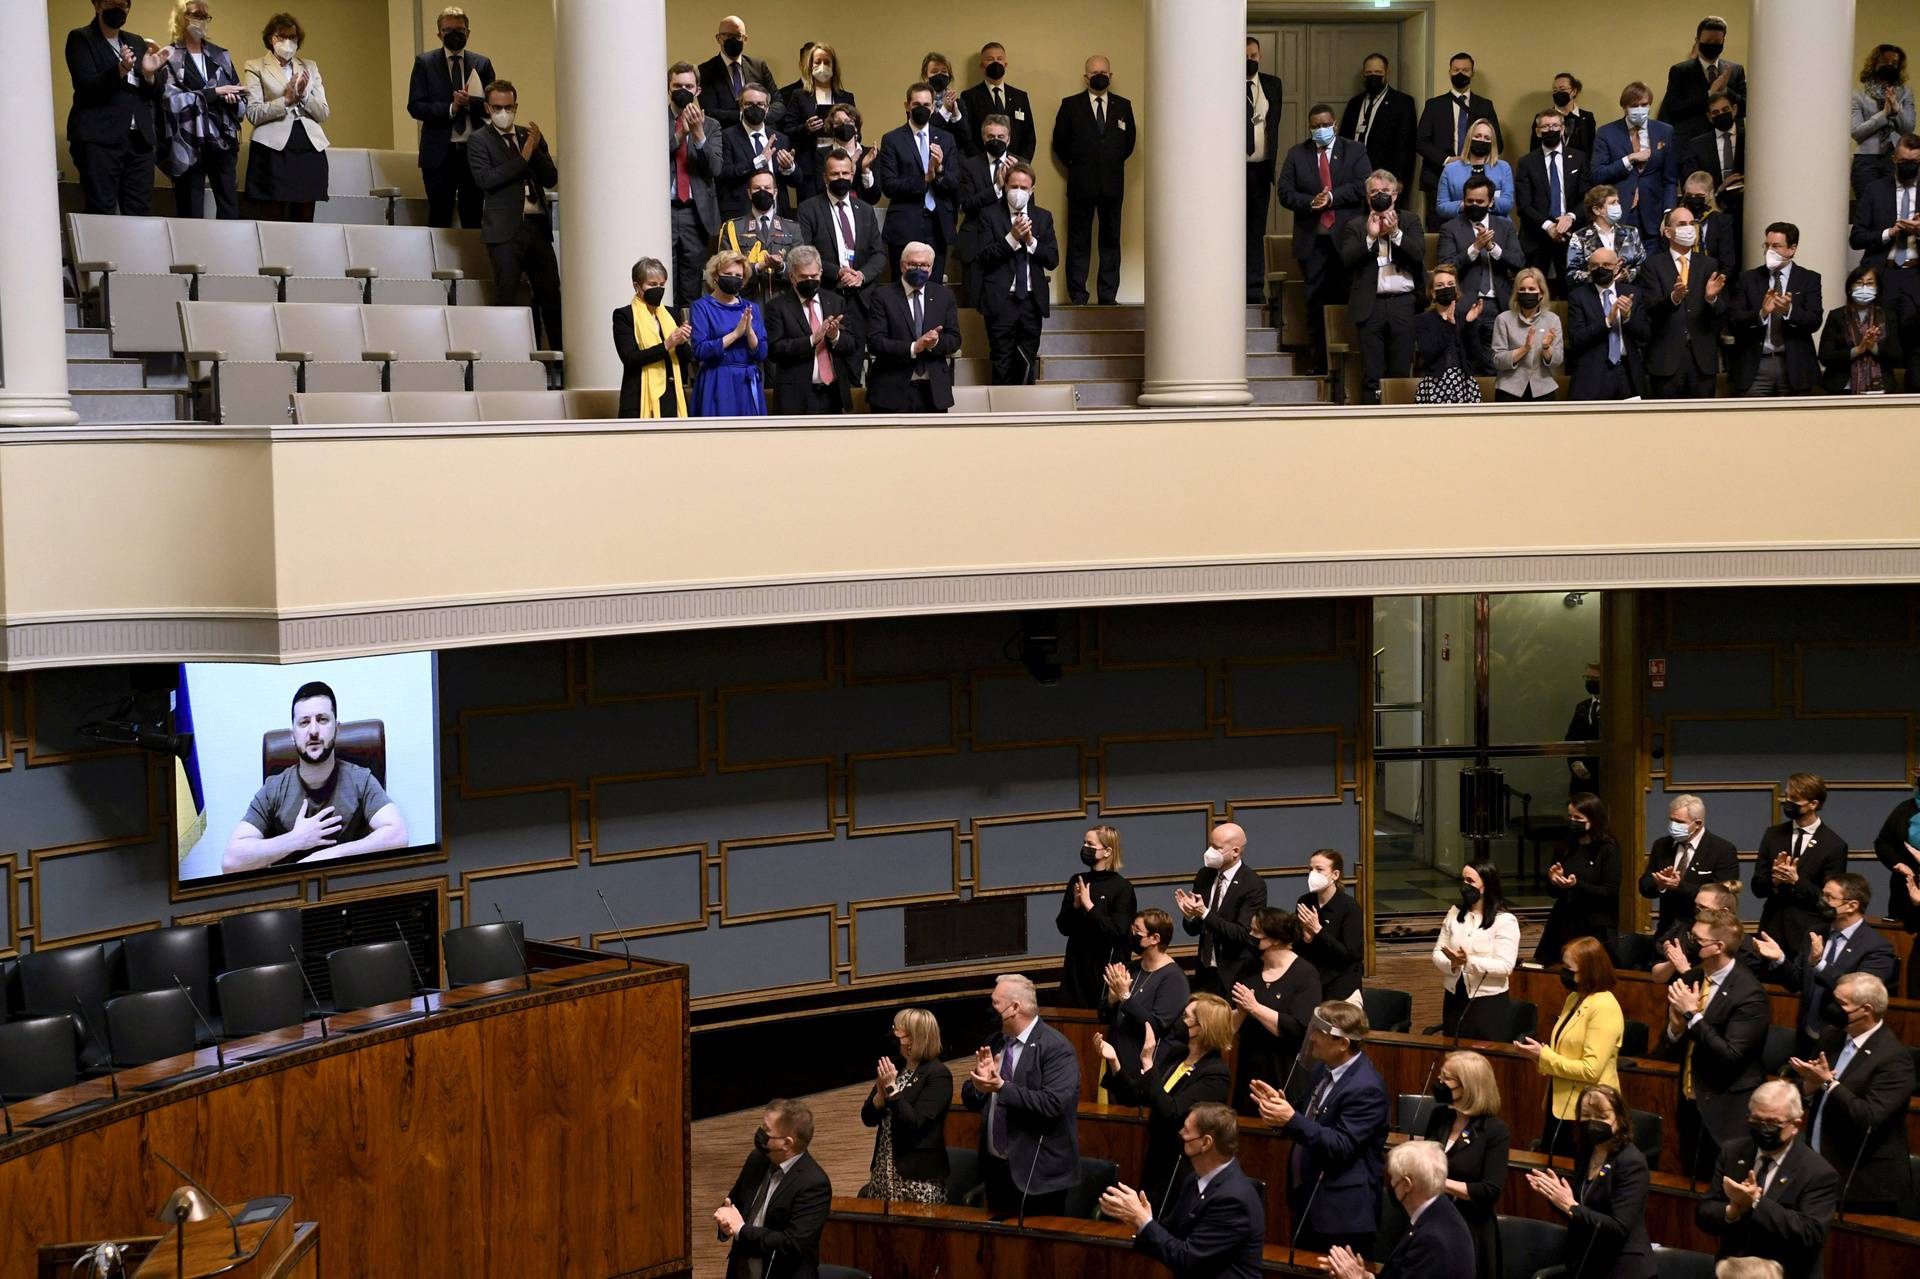 Ukrainian President addresses the Finnish Parliament